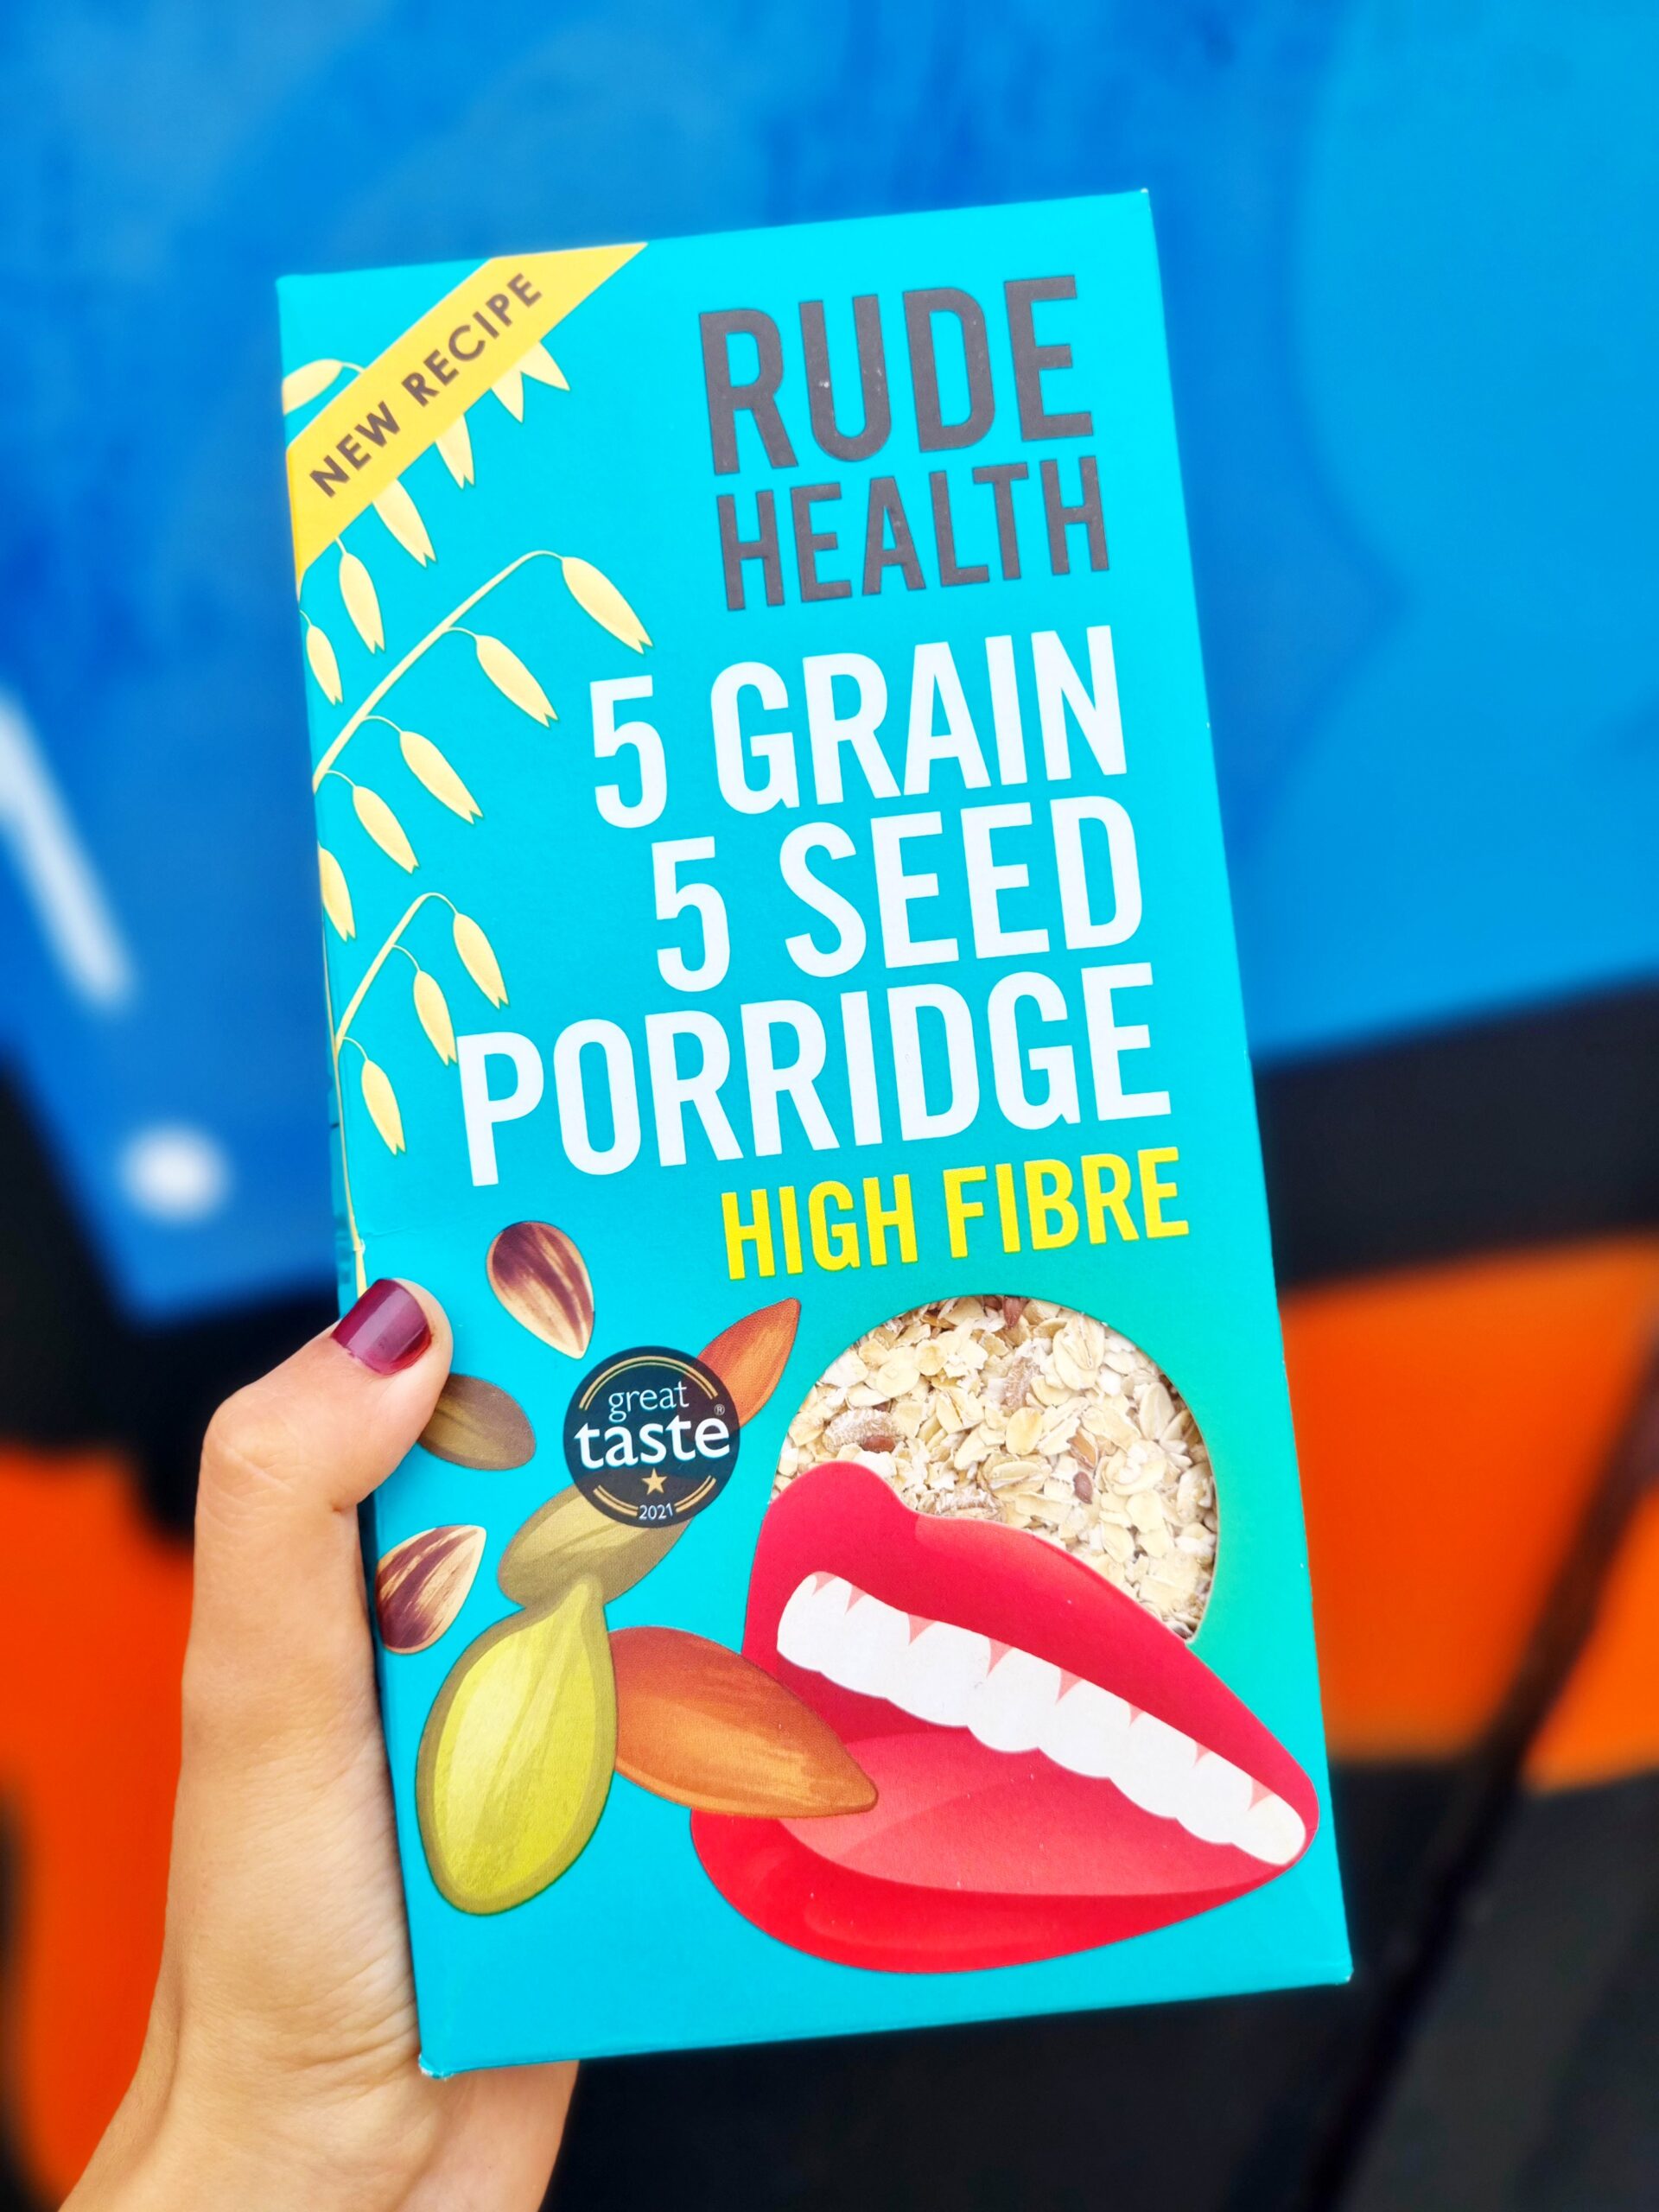 <img src="rude health.jpg" alt="rude health 5 grain porridge"/>